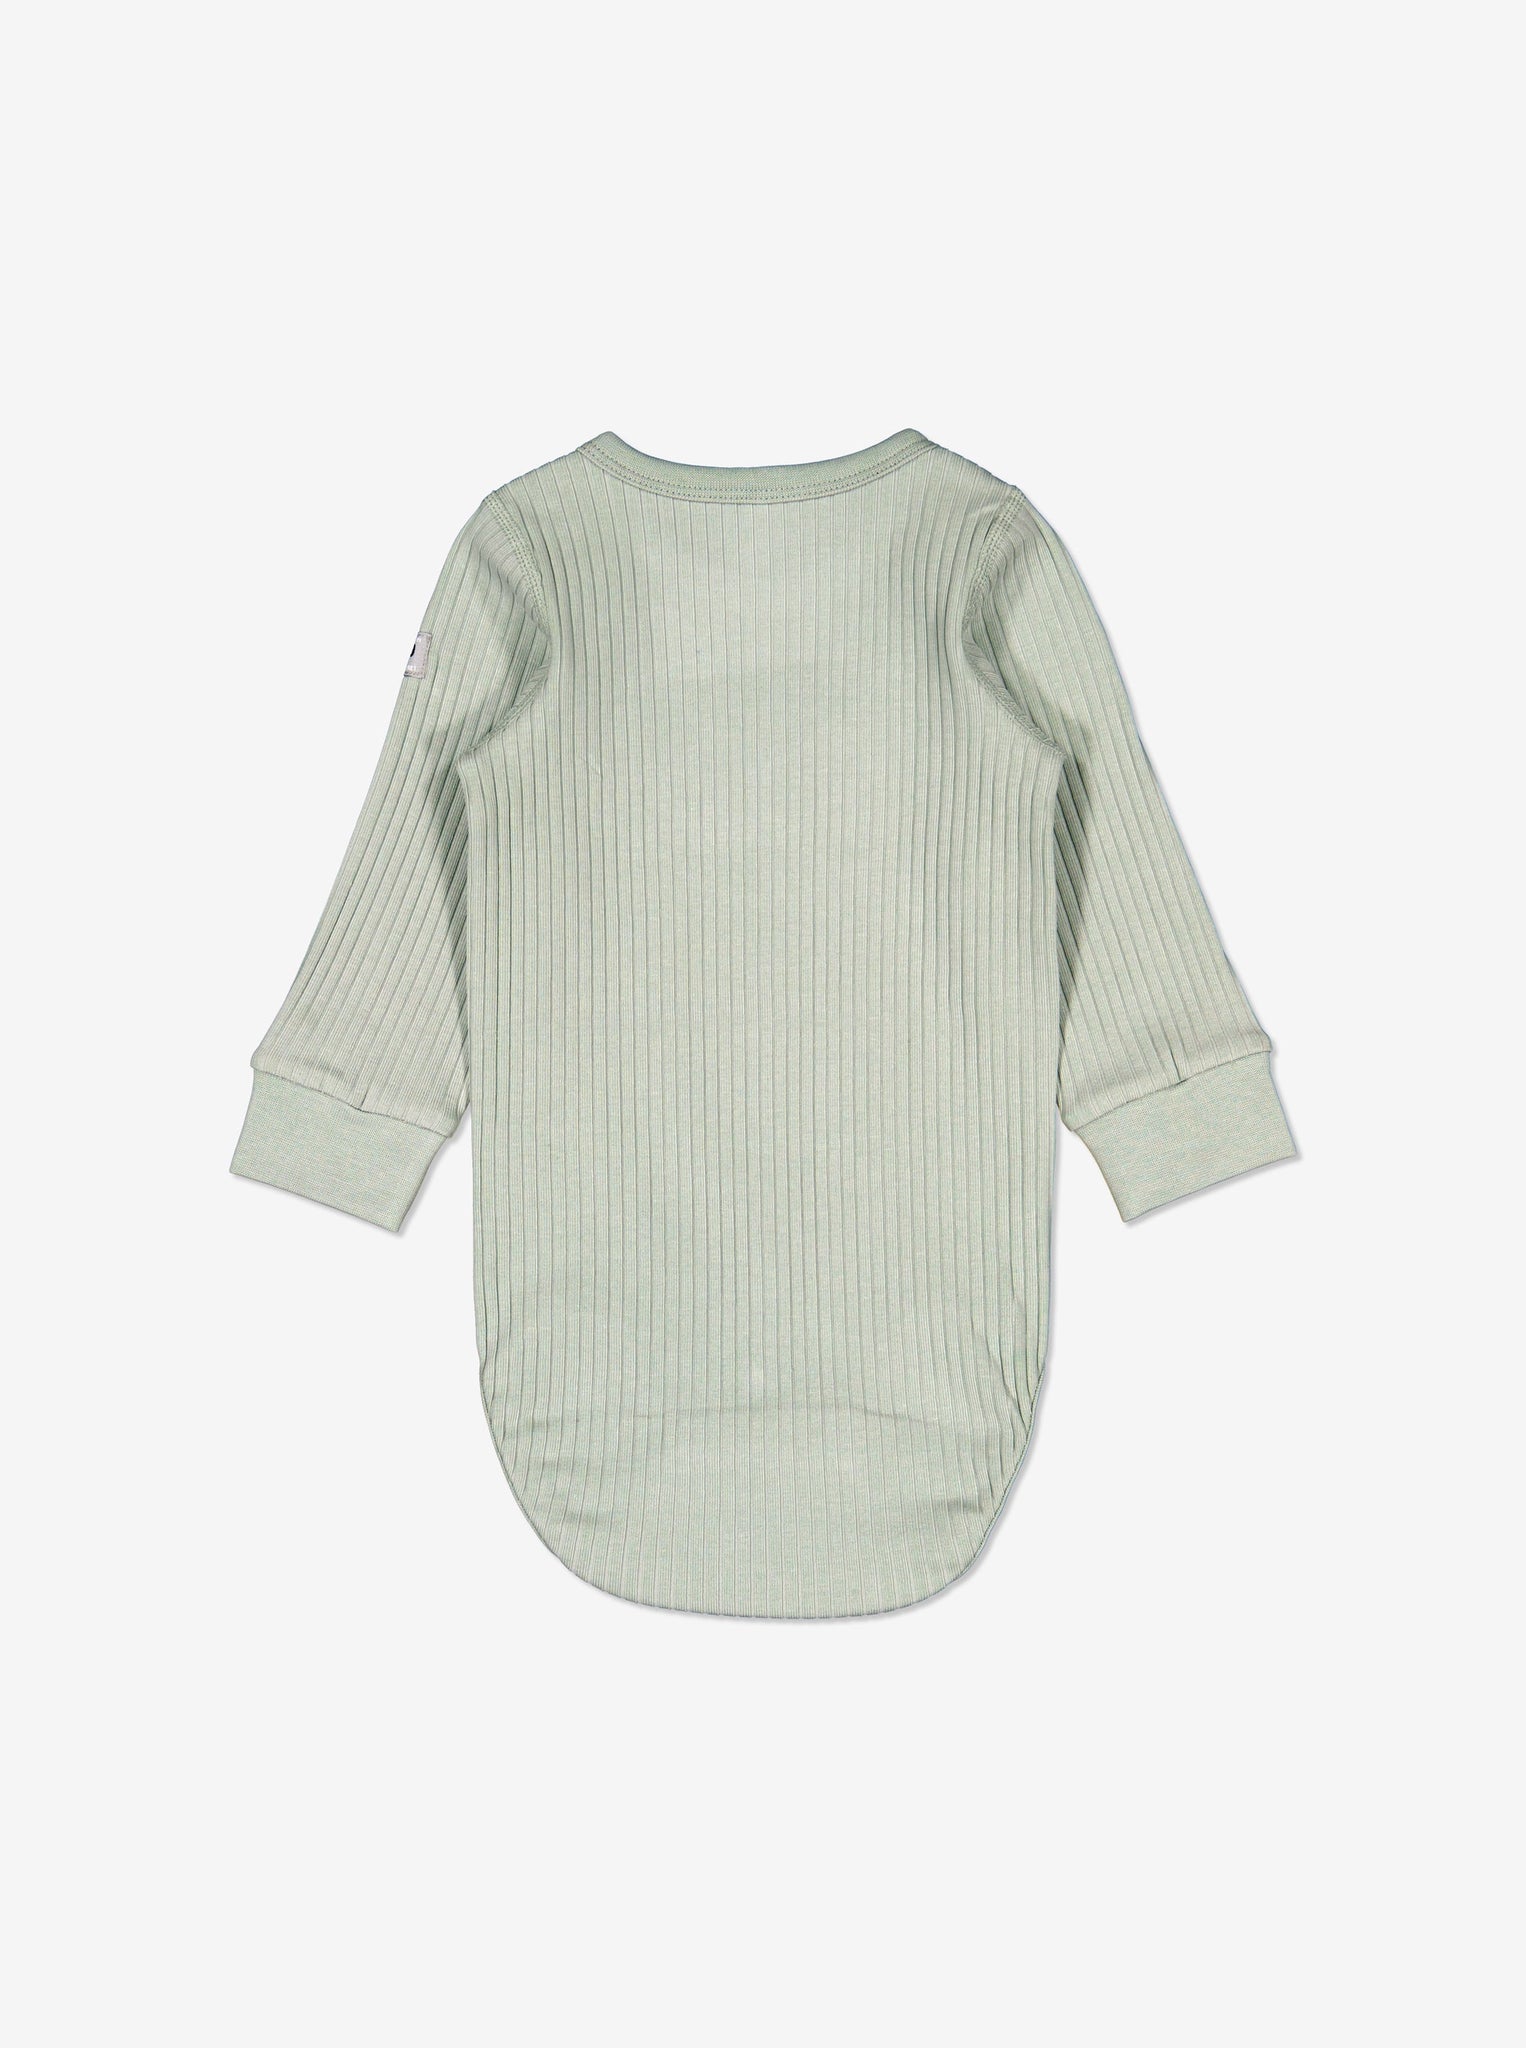  Green Rabbit Print Newborn Babygrow from Polarn O. Pyret Kidswear. Made using sustainable materials.